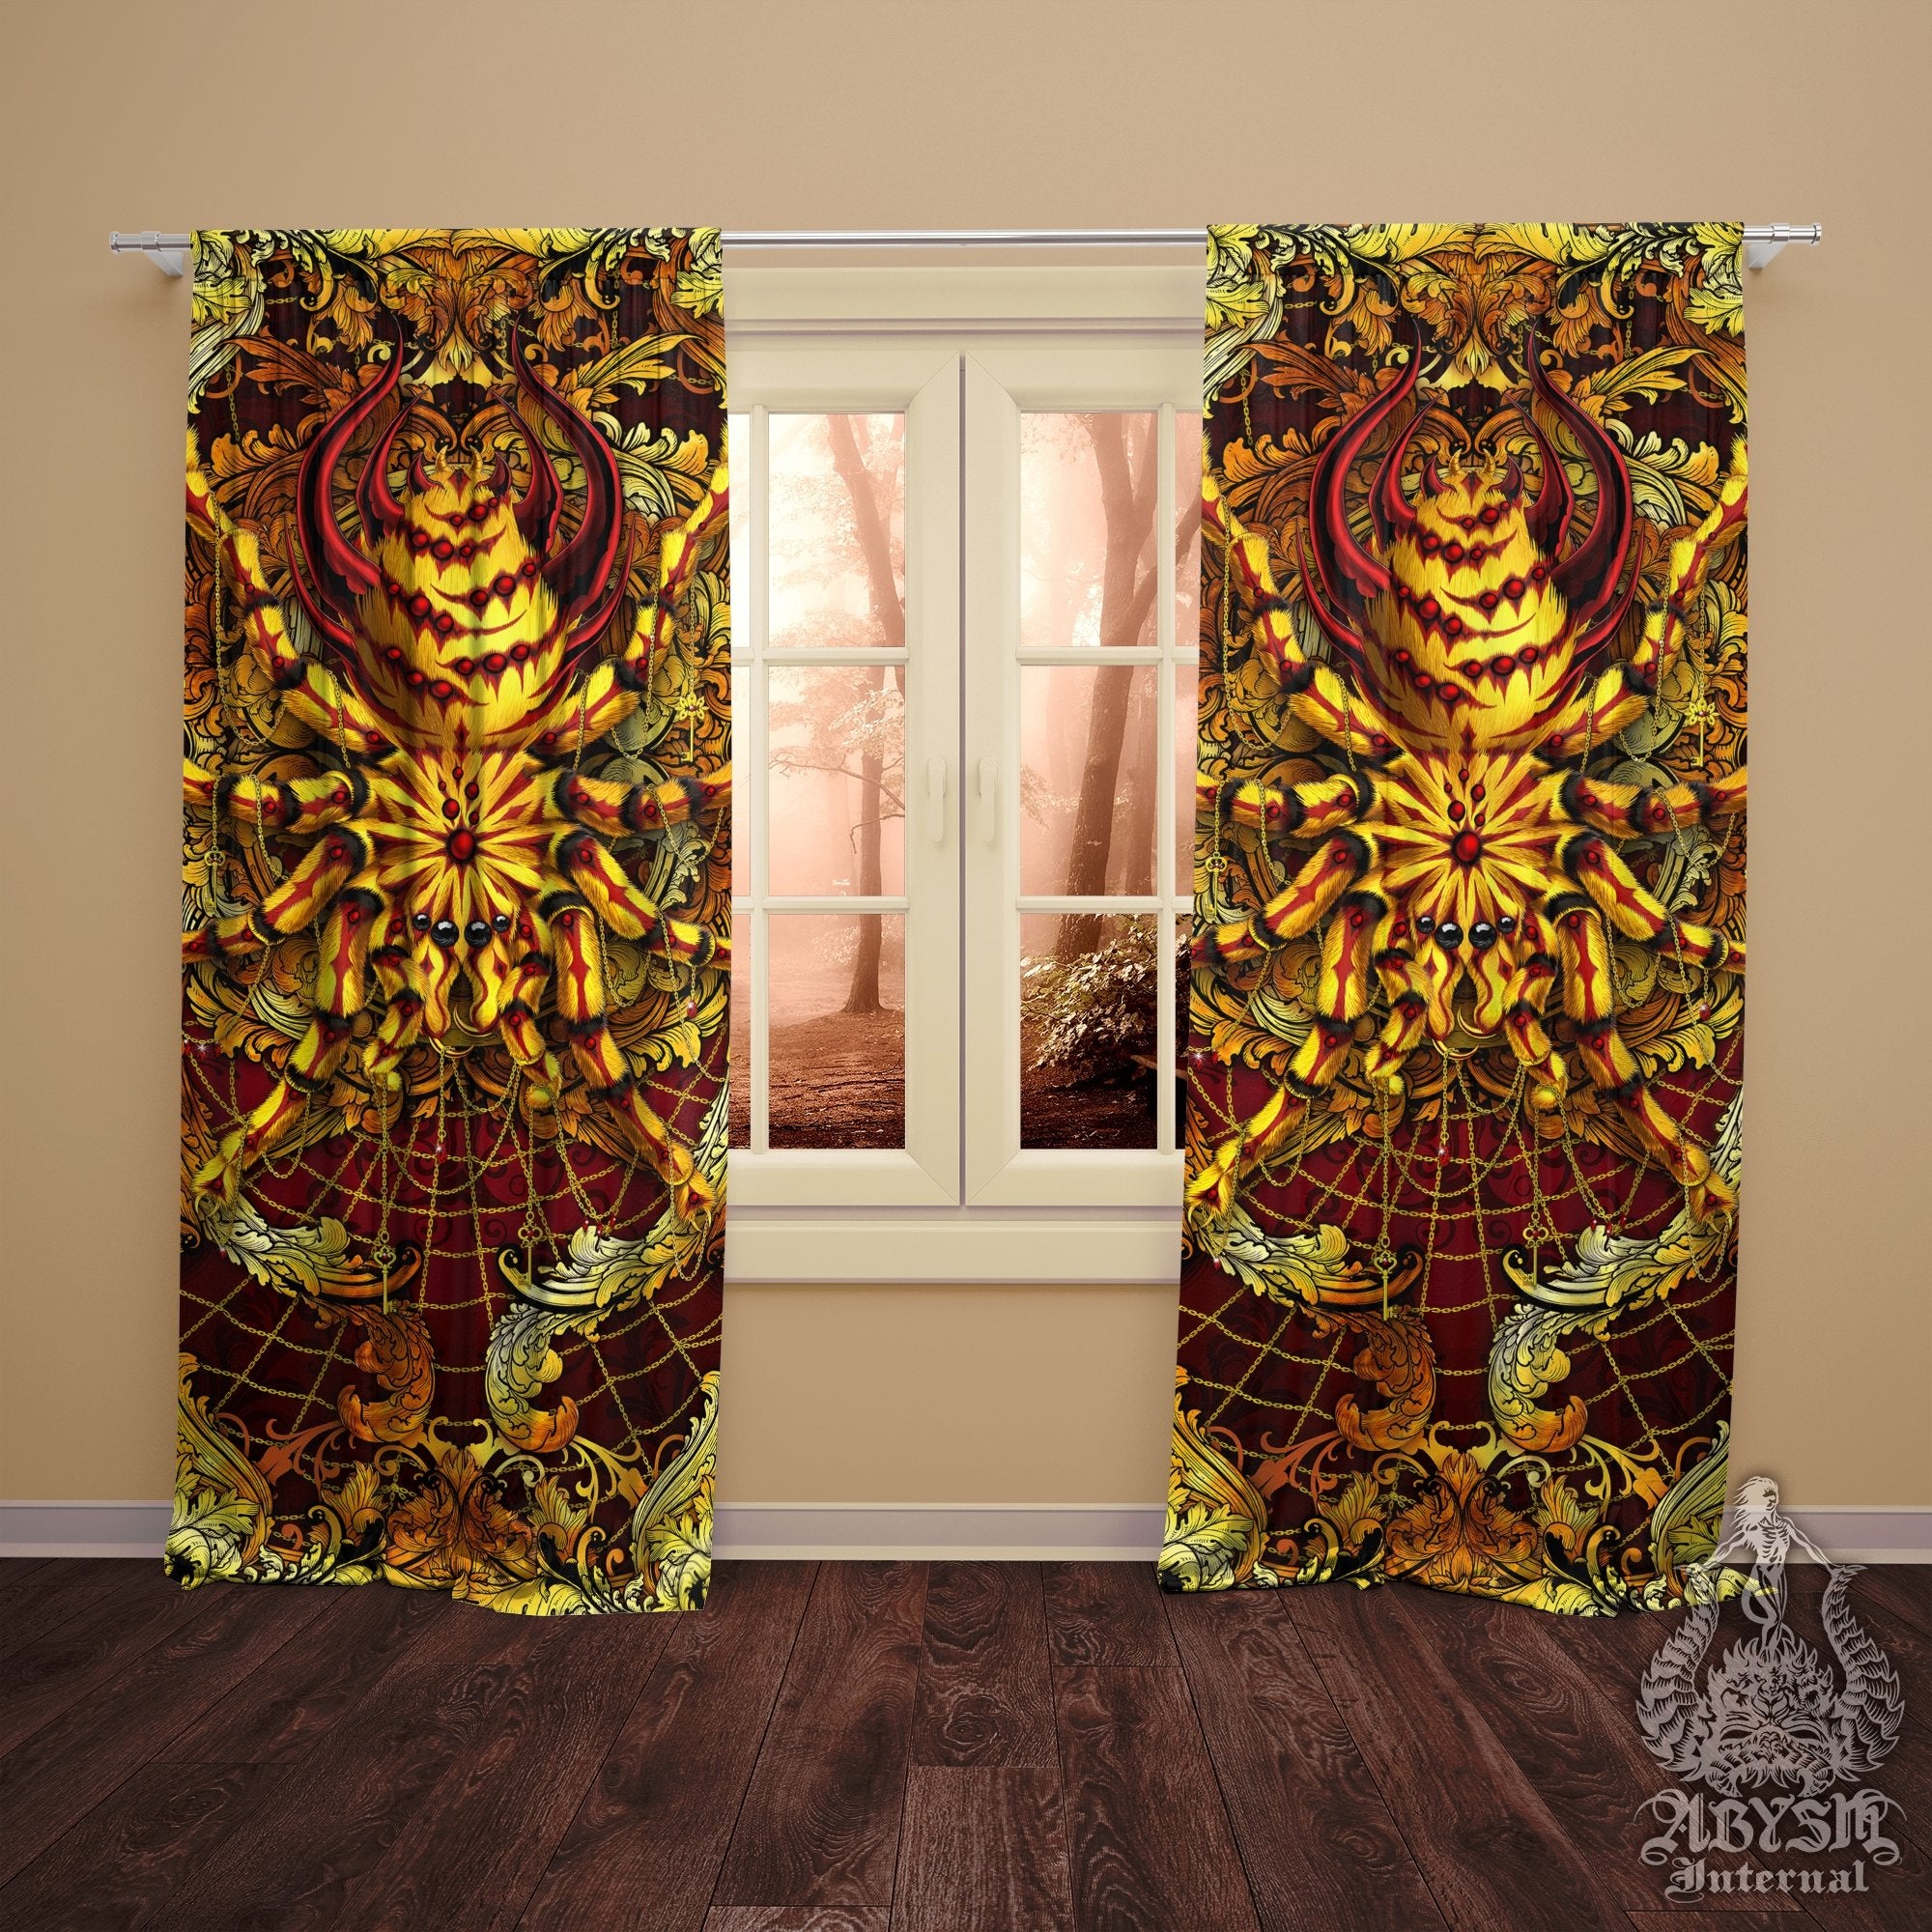 Spider Blackout Curtains, Long Window Panels, Goth Art Print, Fantasy Room Decor - Tarantula, Gold Red - Abysm Internal